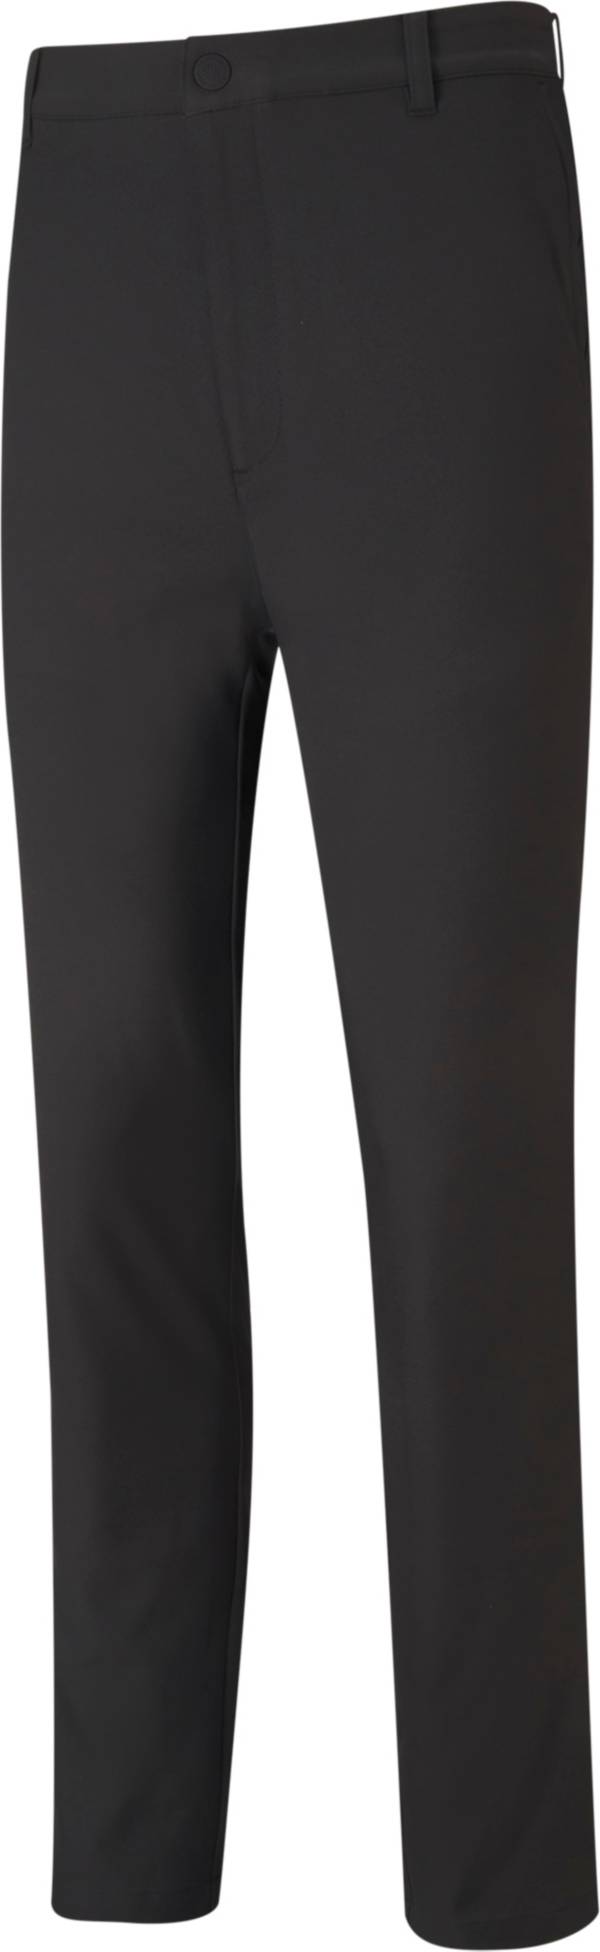 Puma Men's Tailored Jackpot Golf Pants product image